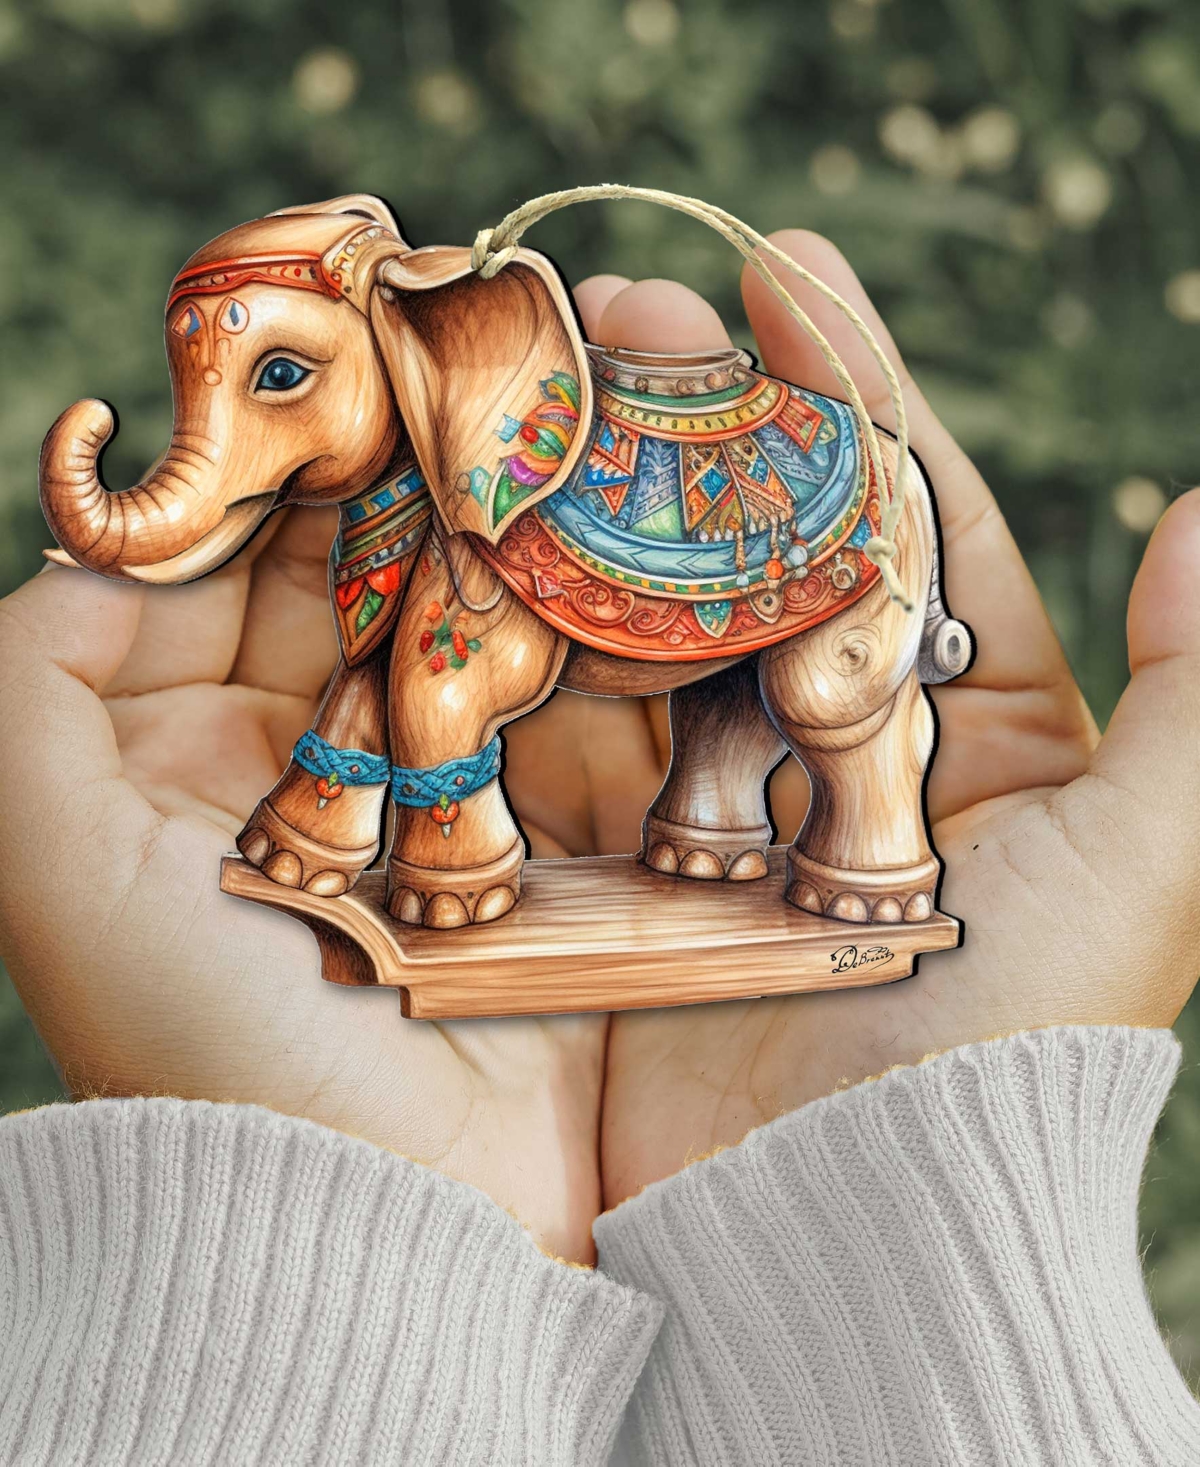 Shop Designocracy Carousel Elephant Christmas Wooden Ornaments Holiday Decor G. Debrekht In Multi Color